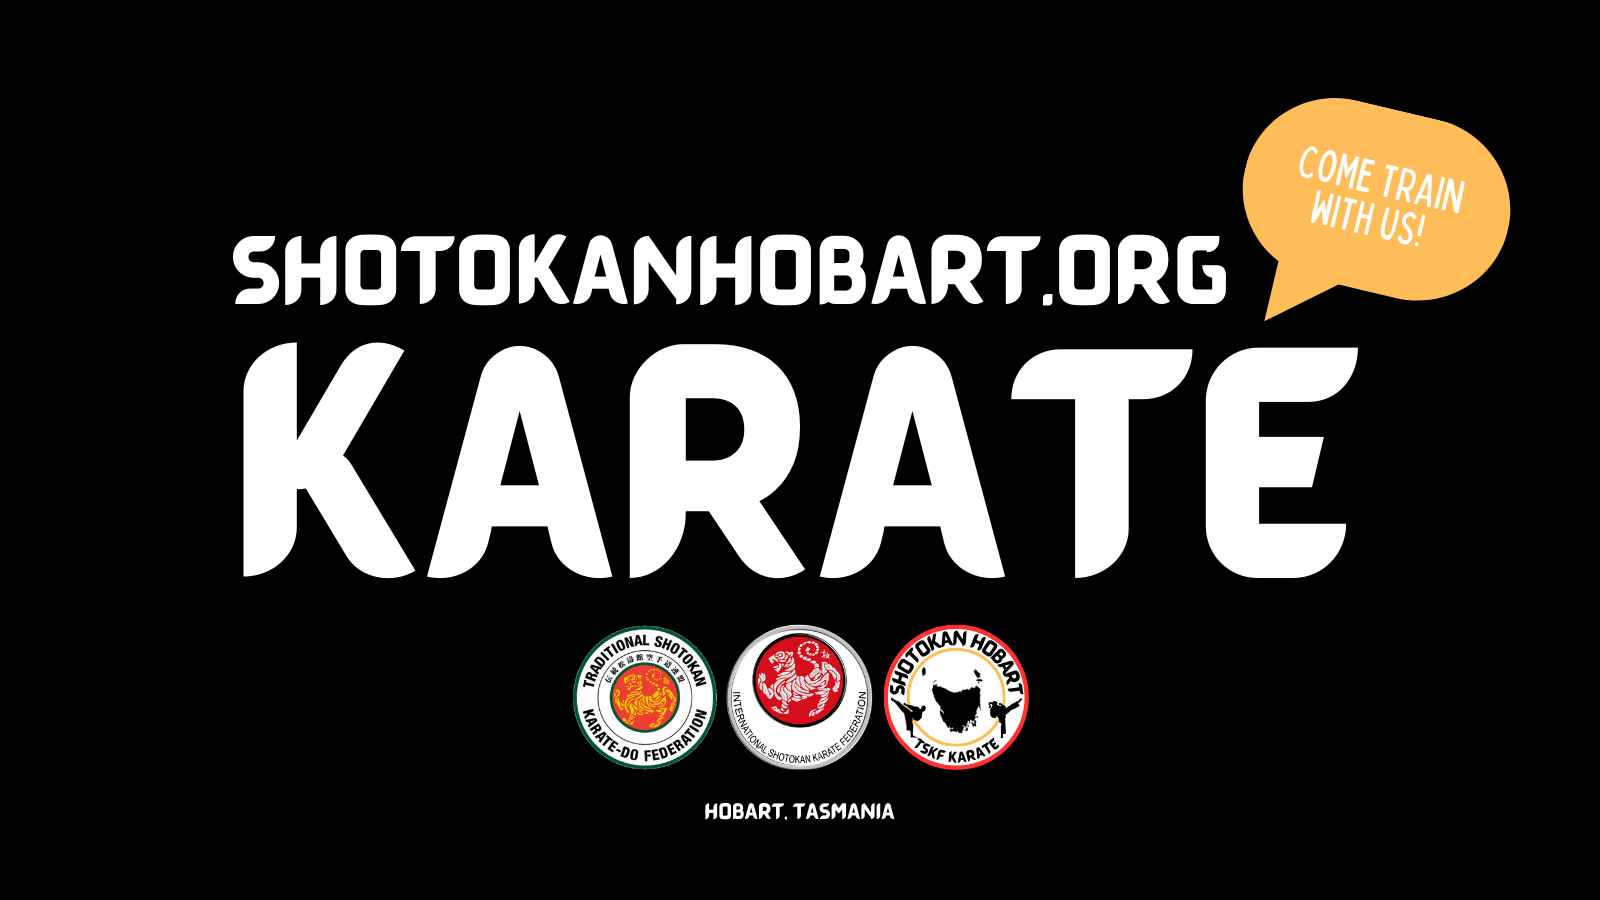 shotokanhobart.org Karate Come train with us various logos of iskf etc hobart, tas